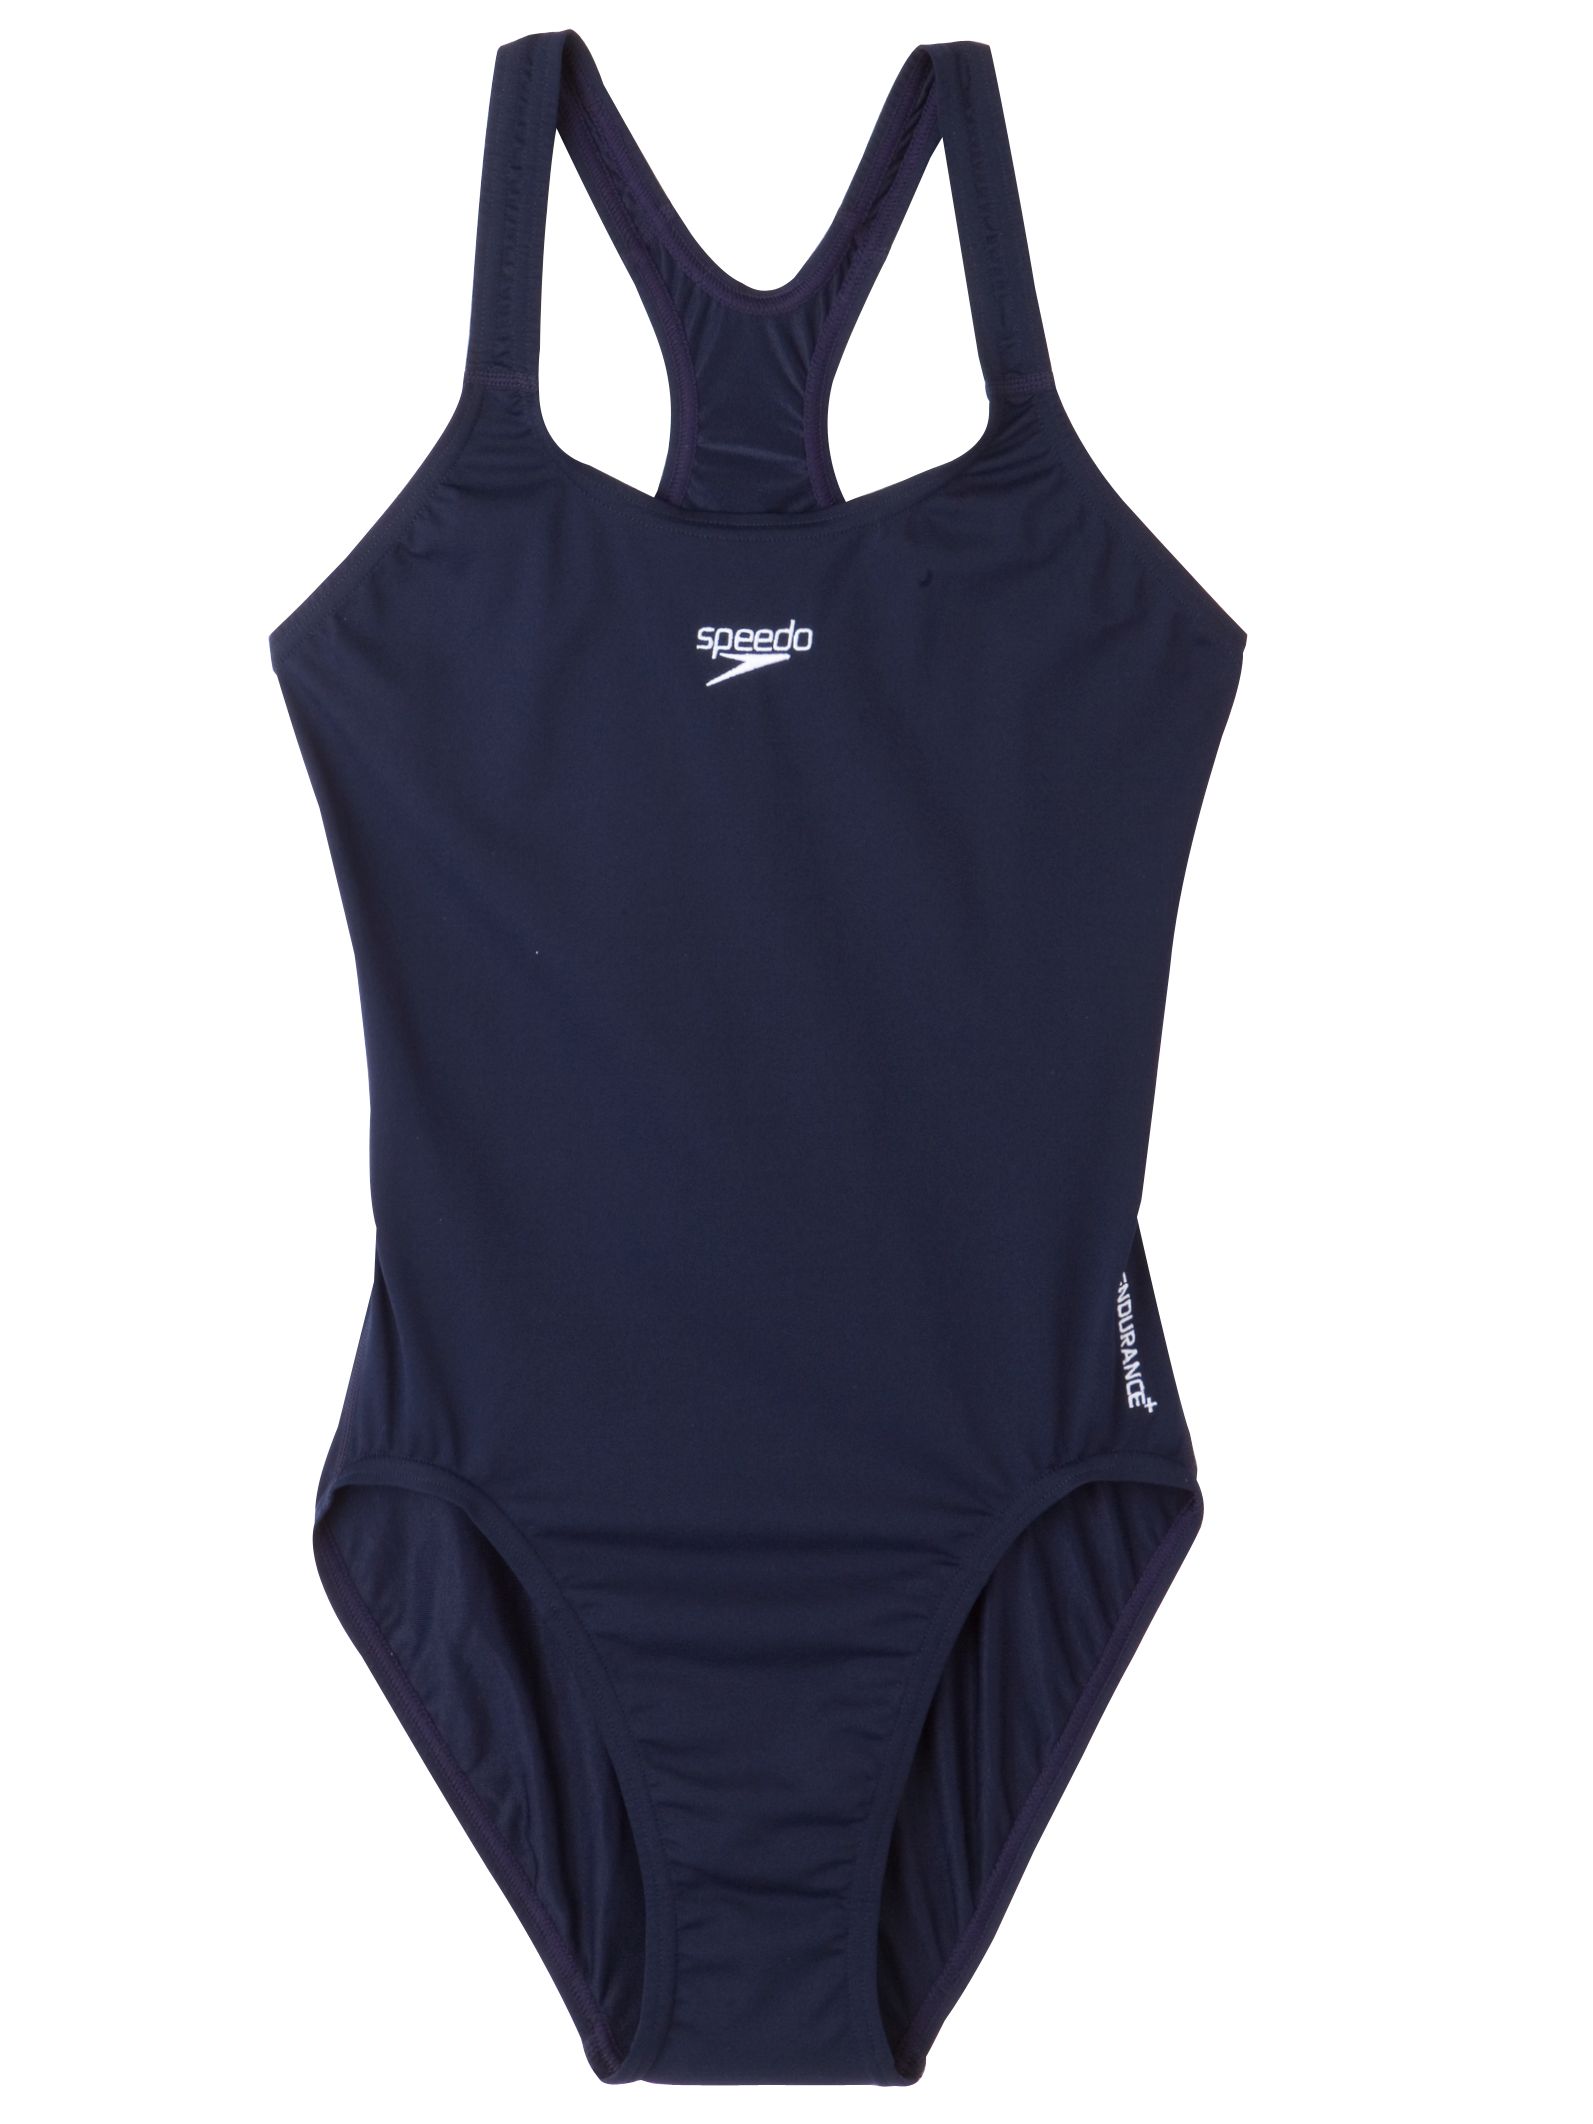 Speedo Endurance  Medalist Swimsuit, Navy, Size 38